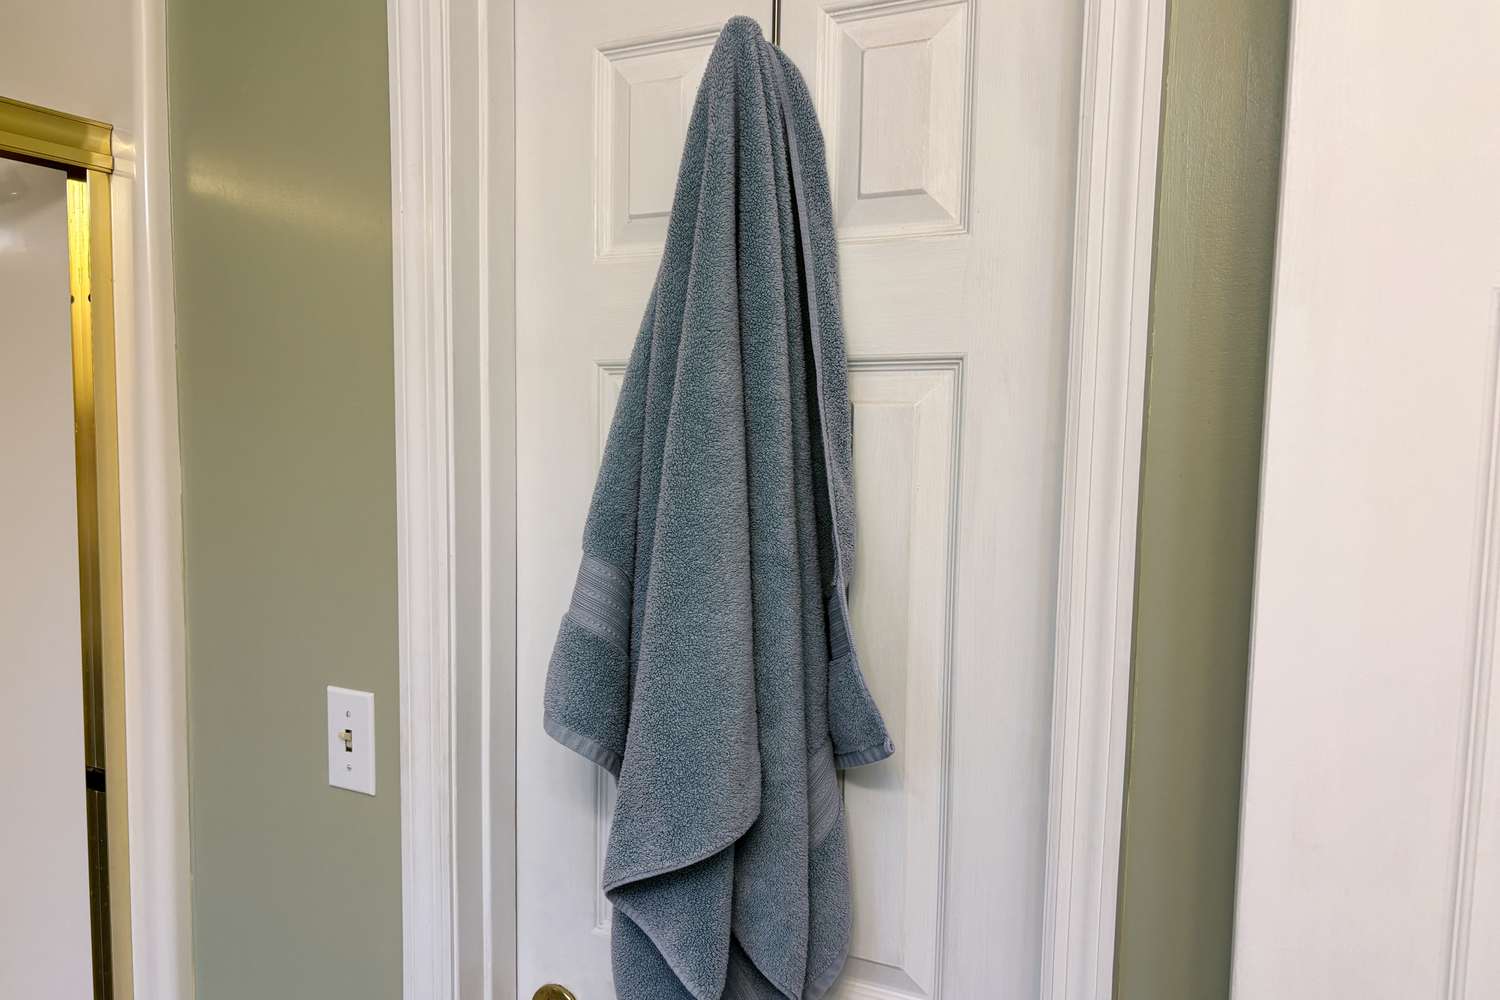 The Better Homes & Gardens Signature Soft Bath Towel hangs on a door hook